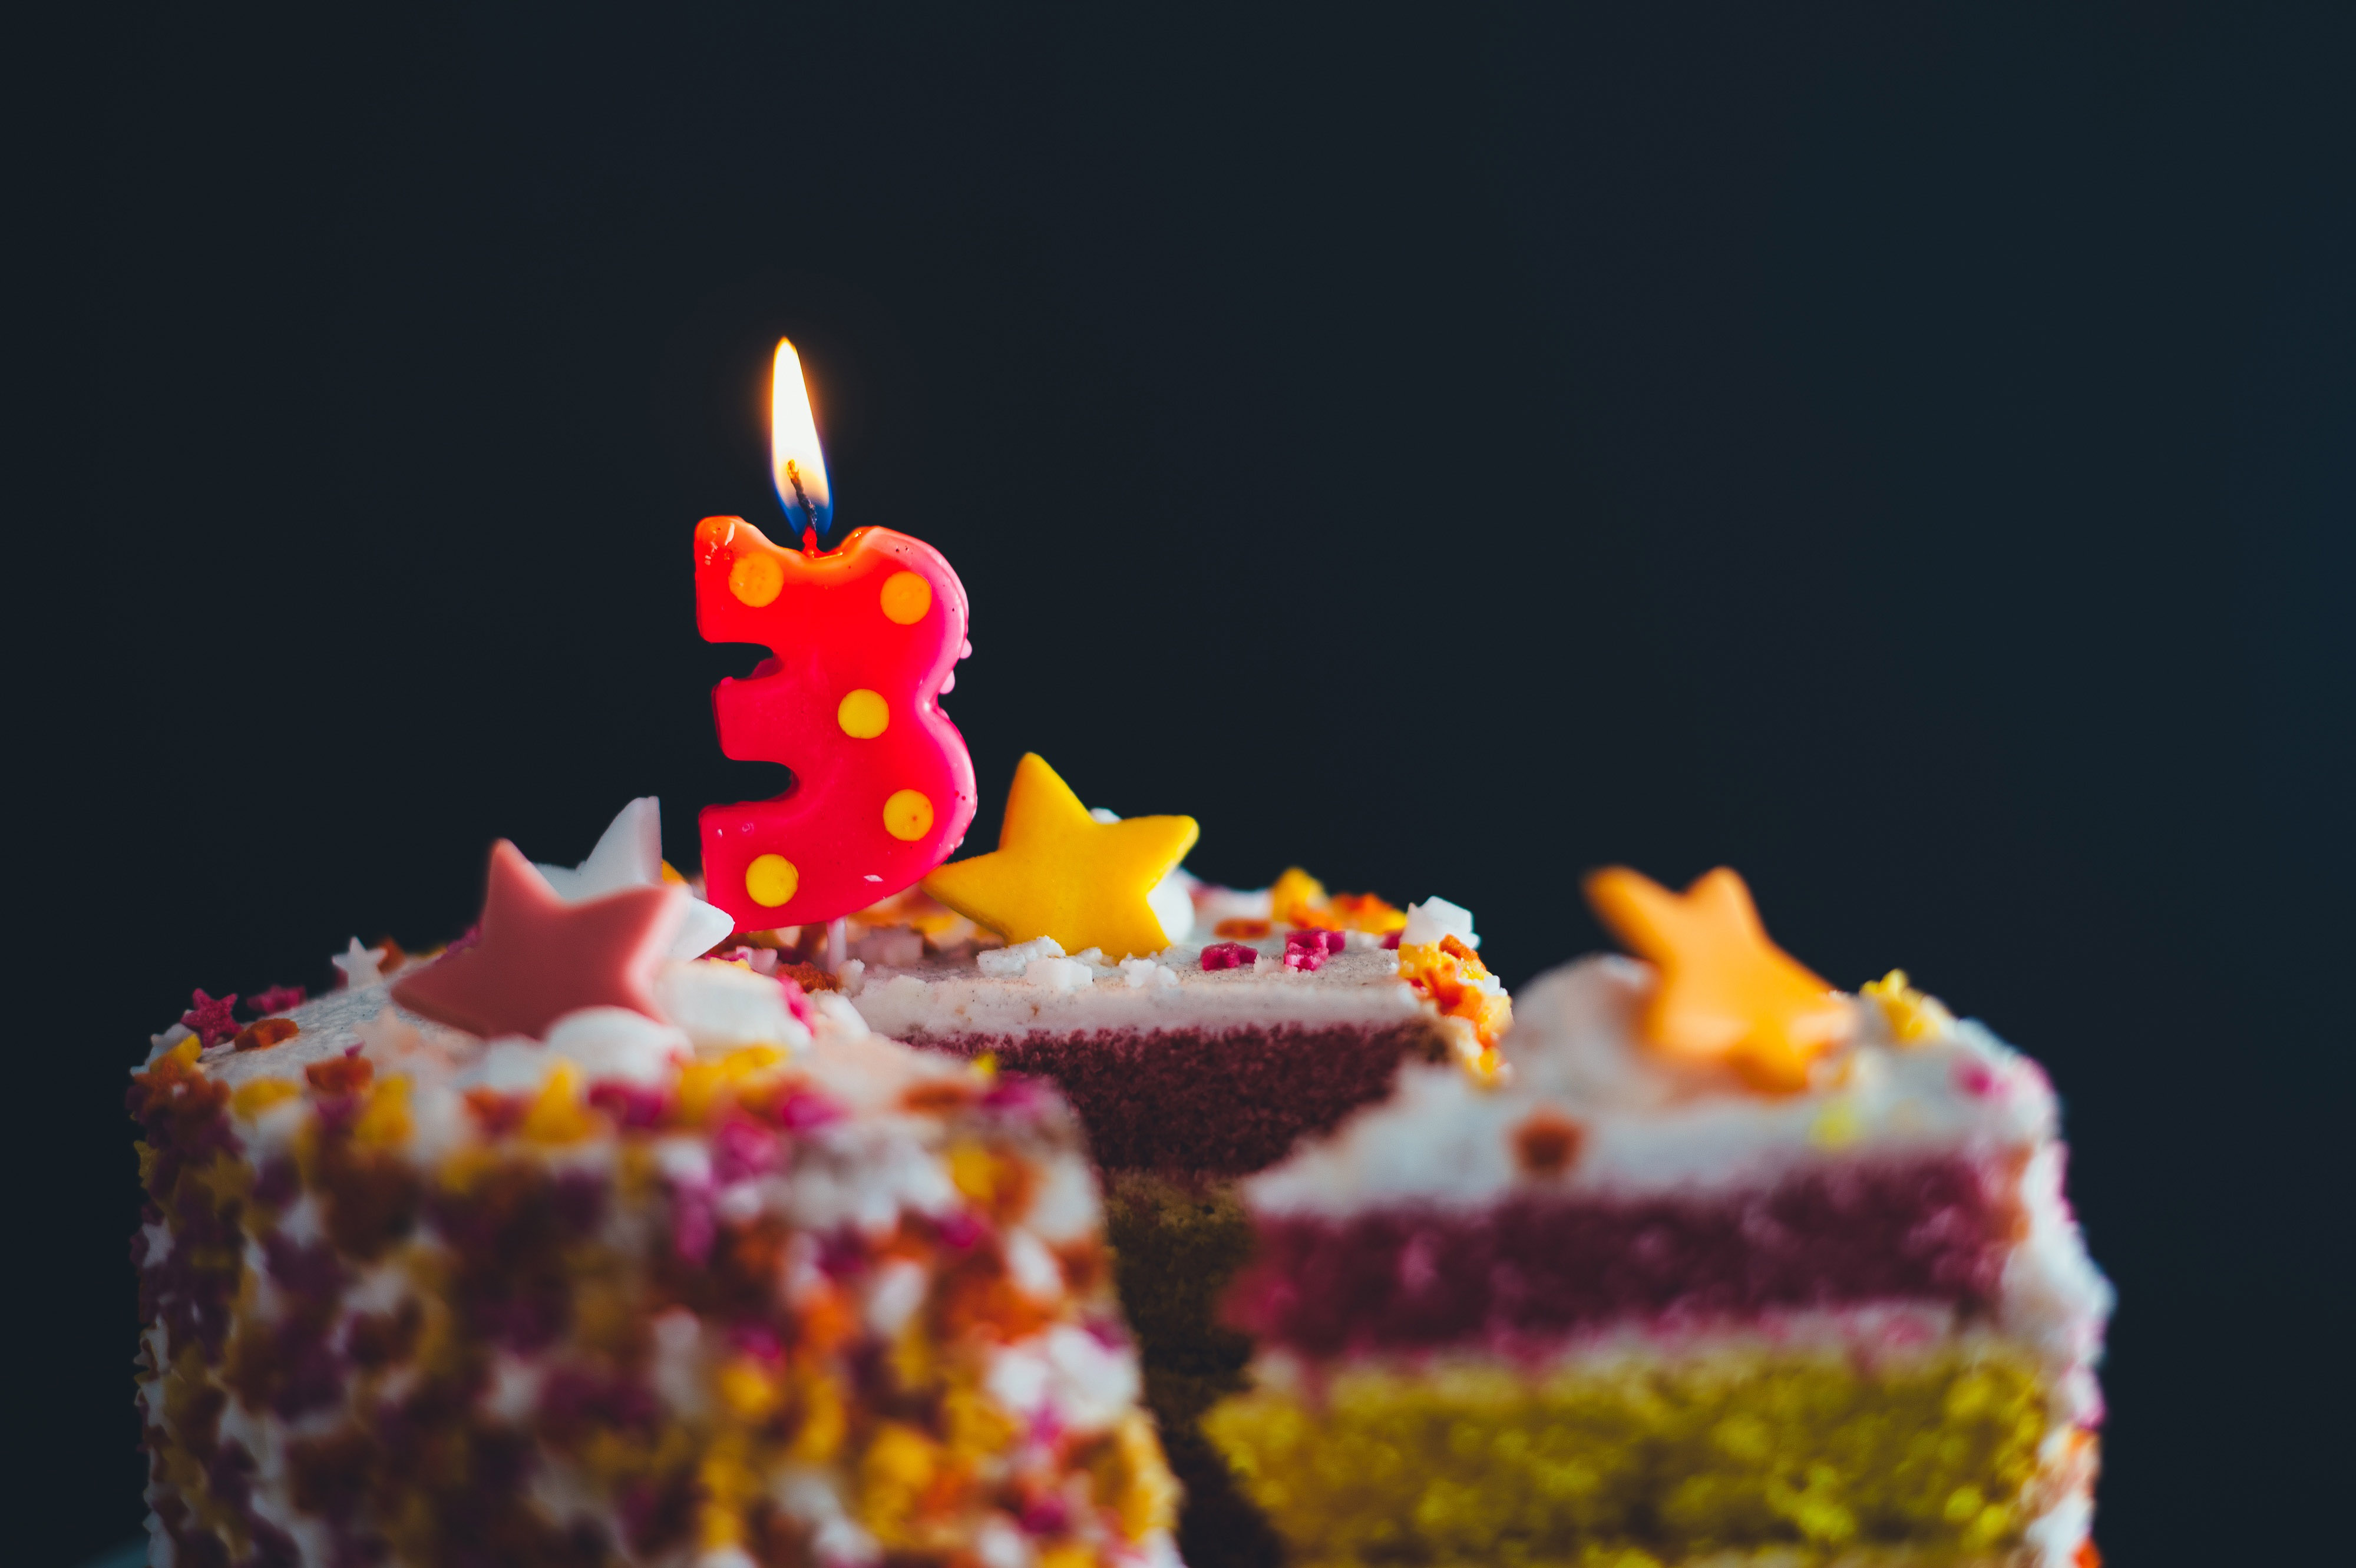 Third birthday celebration and cake image Domain photo